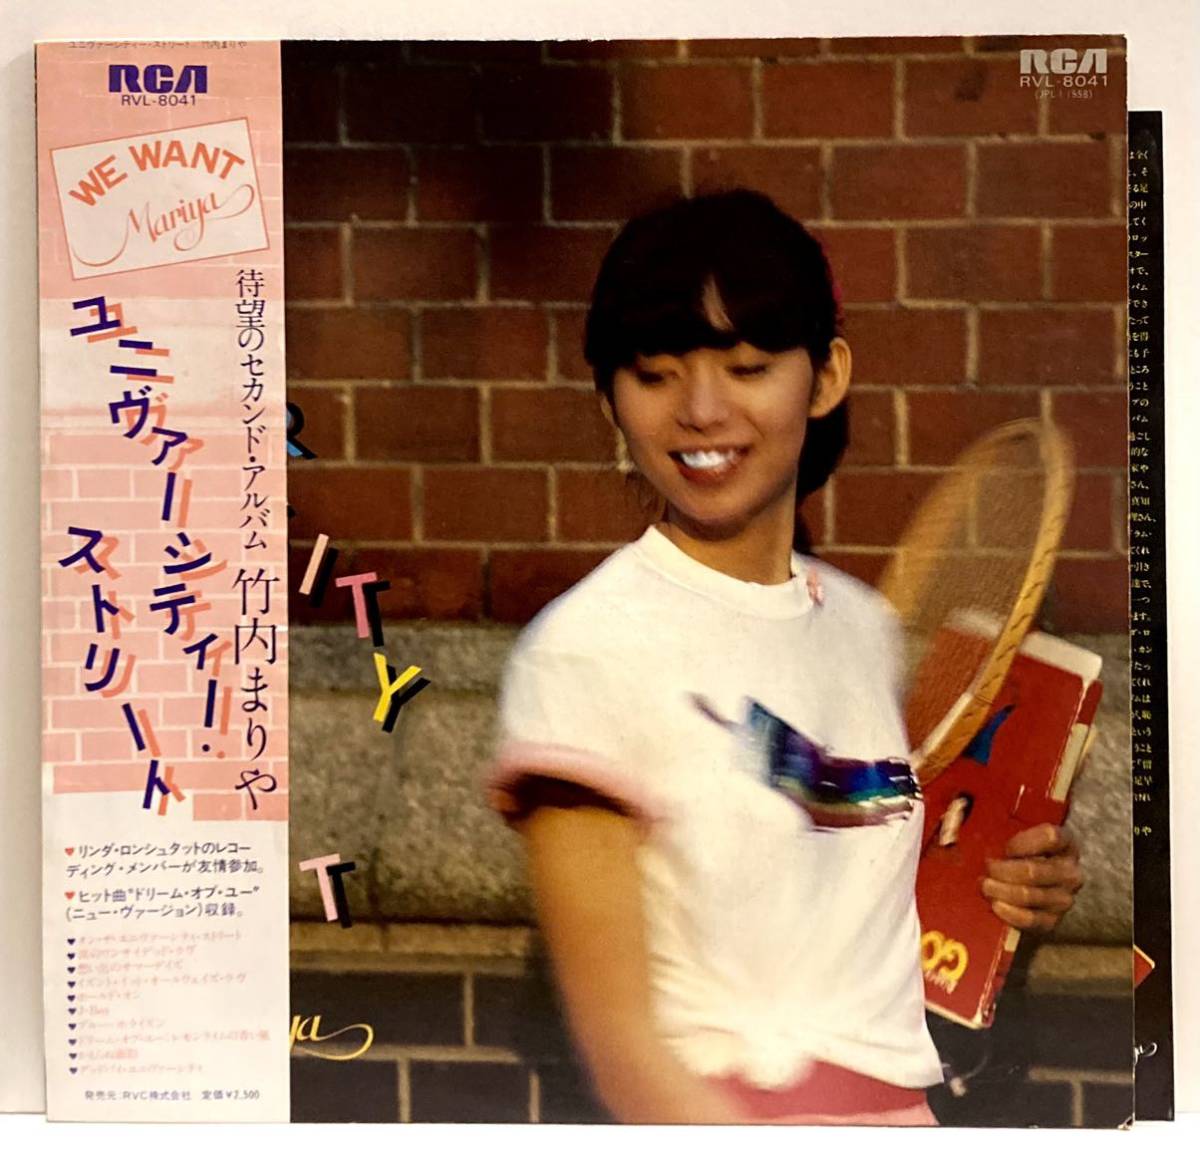  half transparent record superior article LP!79 year o Rige! obi, insert attaching! Takeuchi Mariya Mariya Takeuchi Uni va- City Street University Street RCA RVL-8041